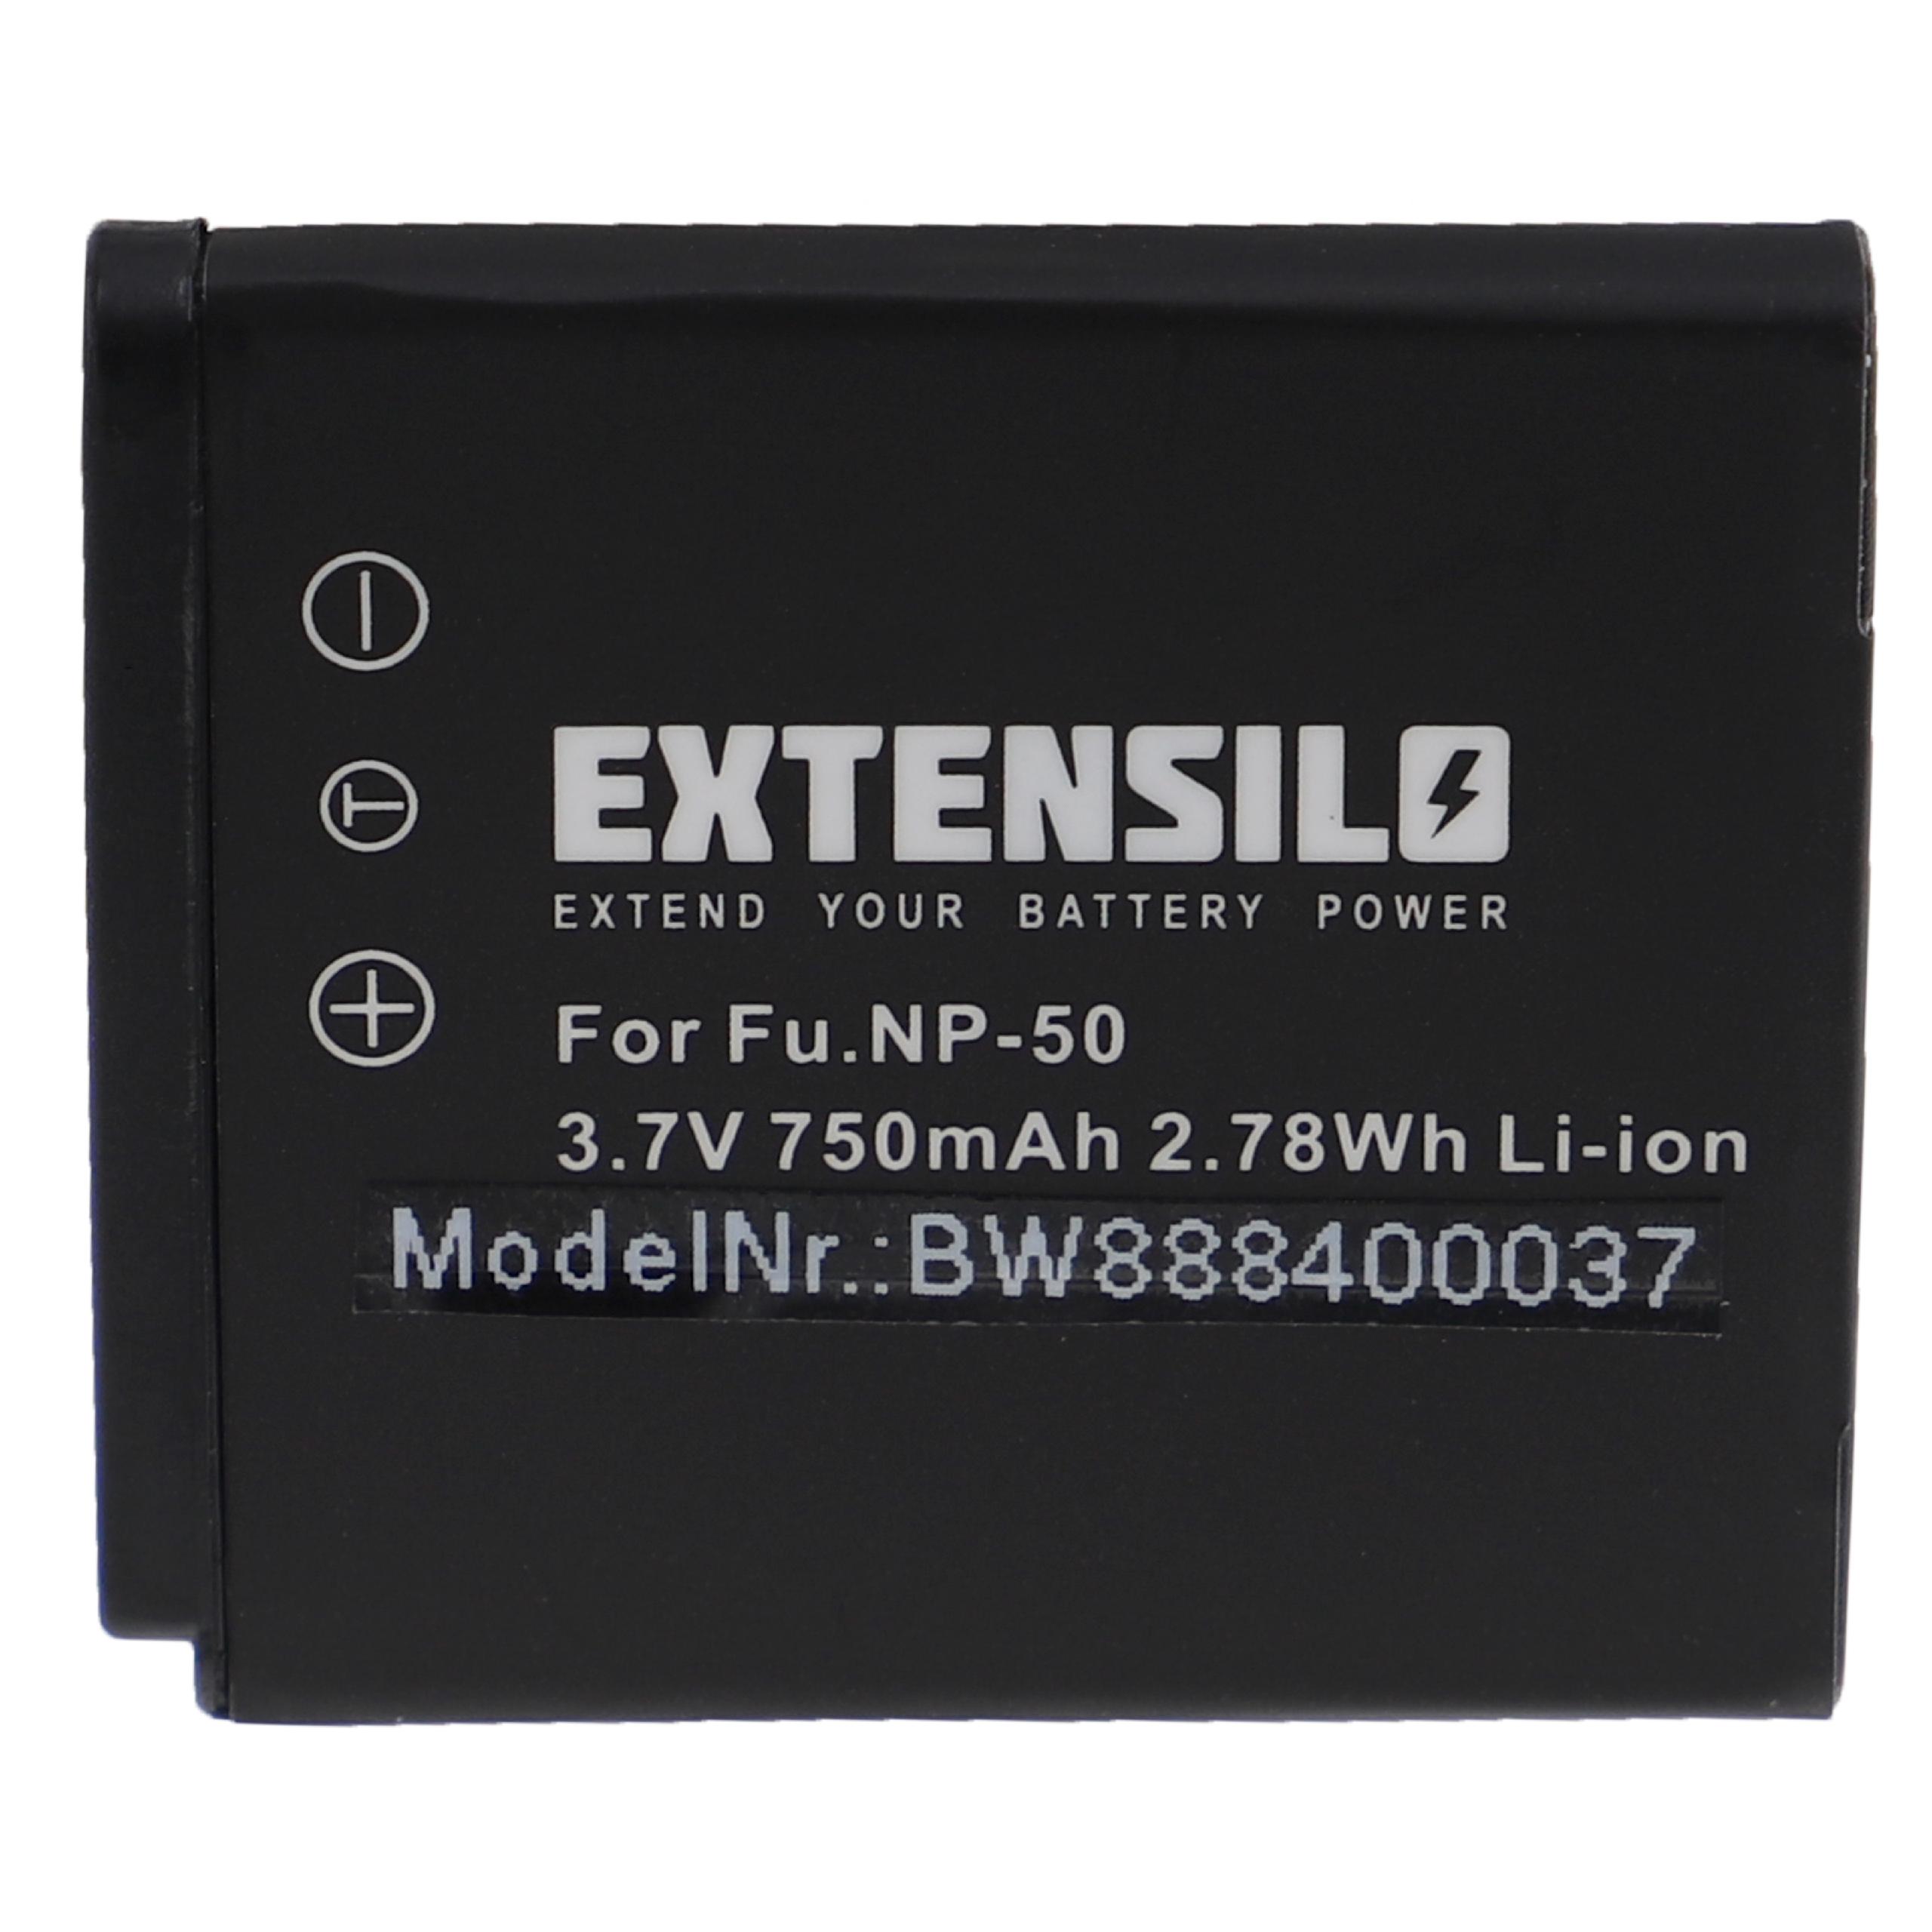 Batterie remplace Fuji / Fujifilm NP-50 pour appareil photo - 750mAh 3,7V Li-ion